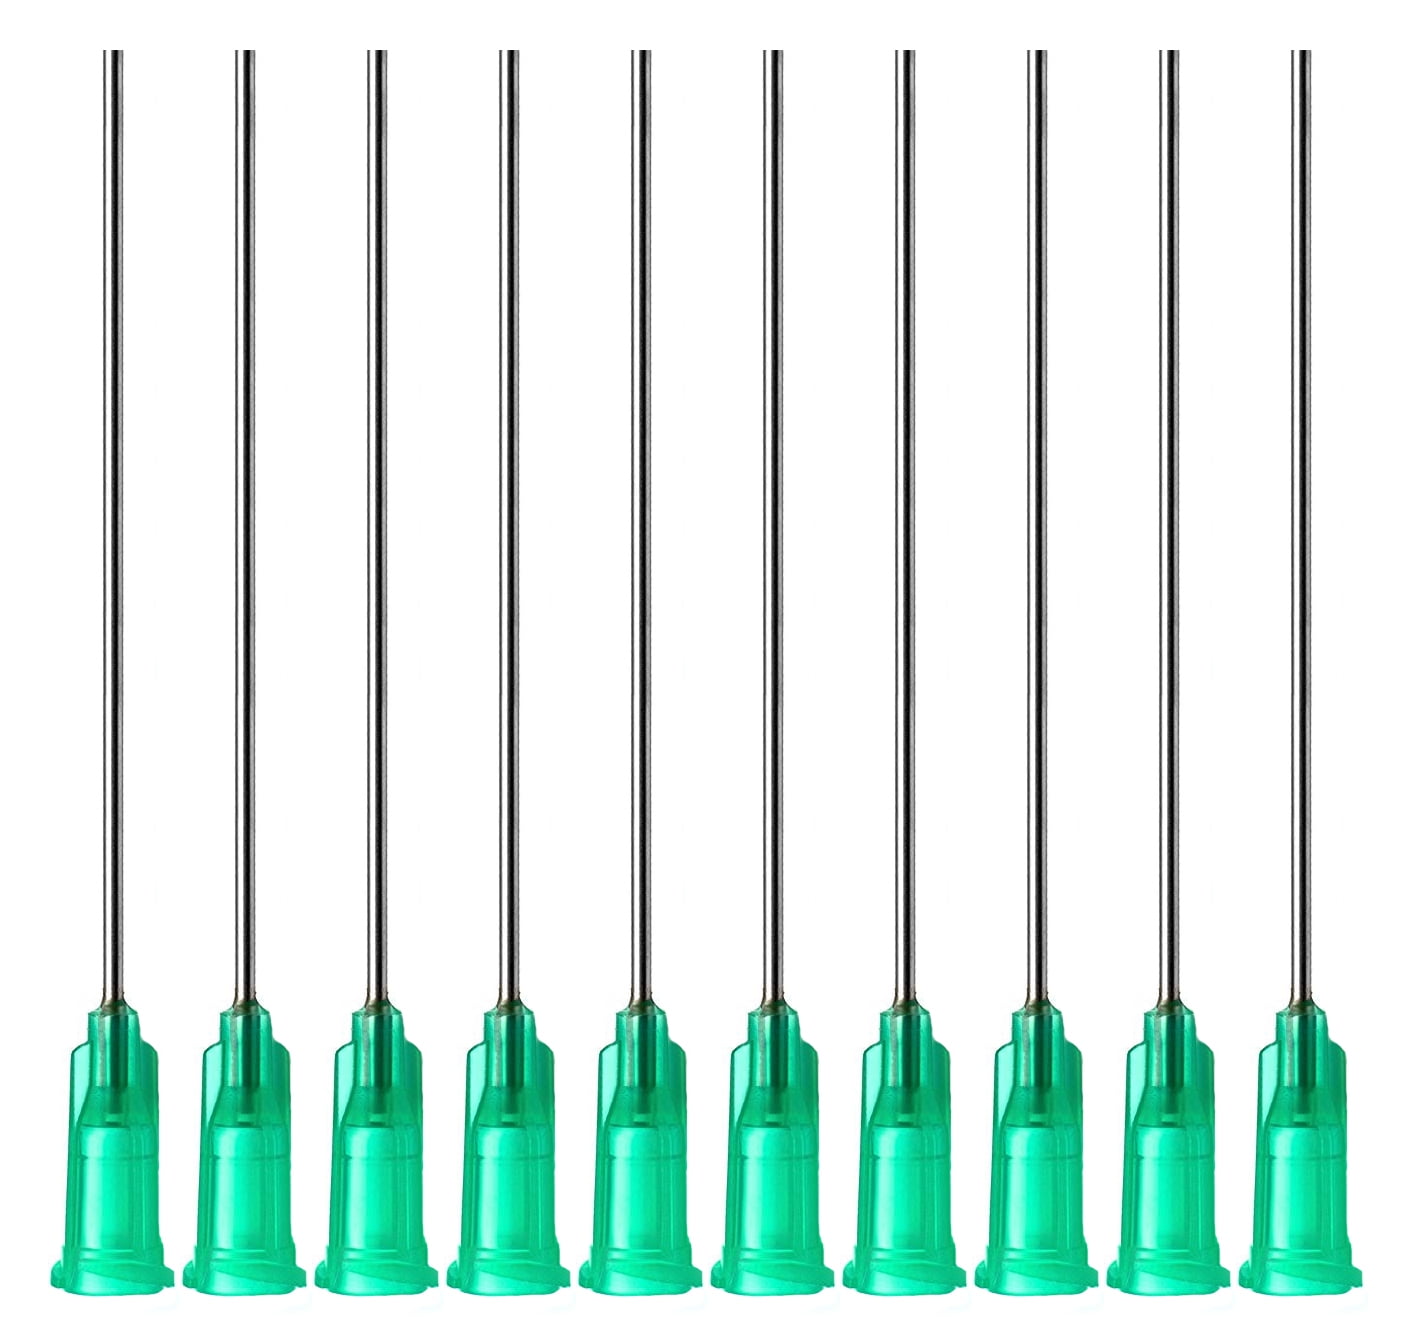 50pcs 1/2"  Blunt dispensing needles syringe needle tips 18Gauge  Green 